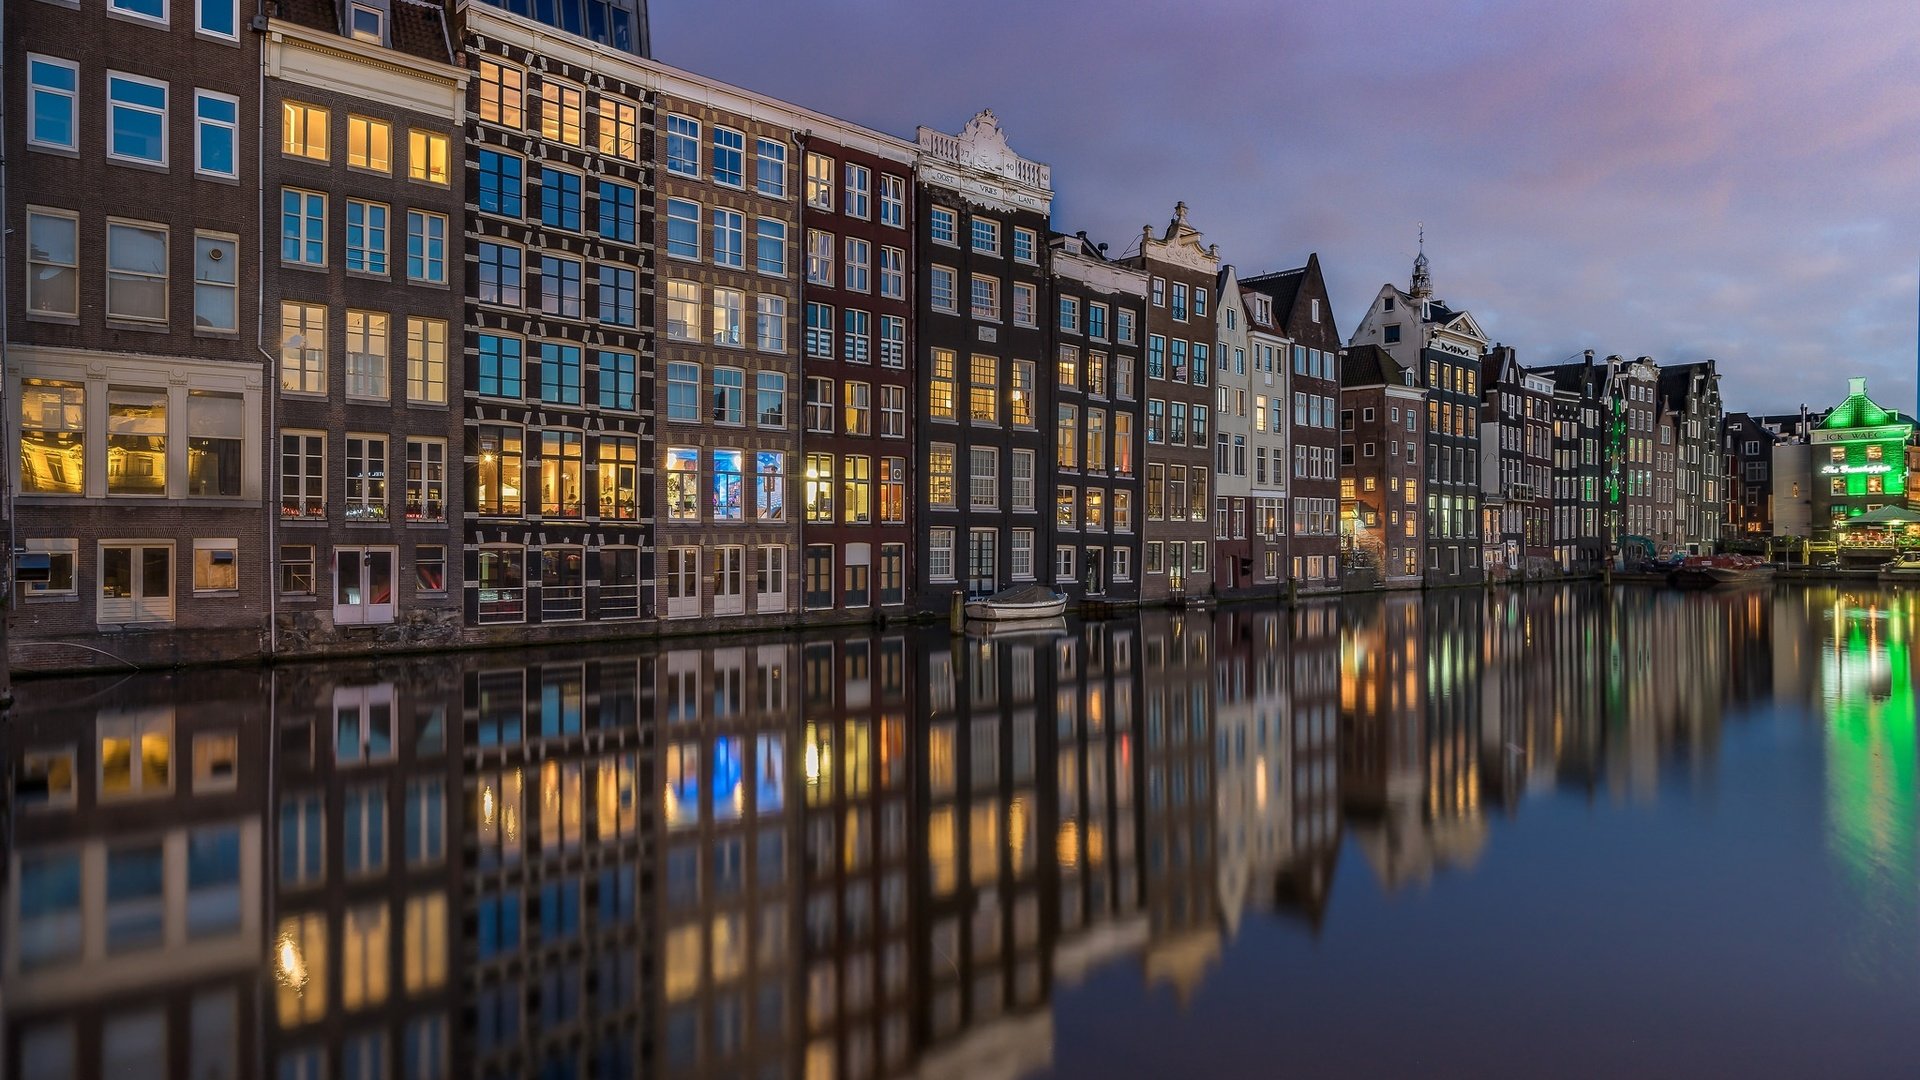 Обои амстердам для стен